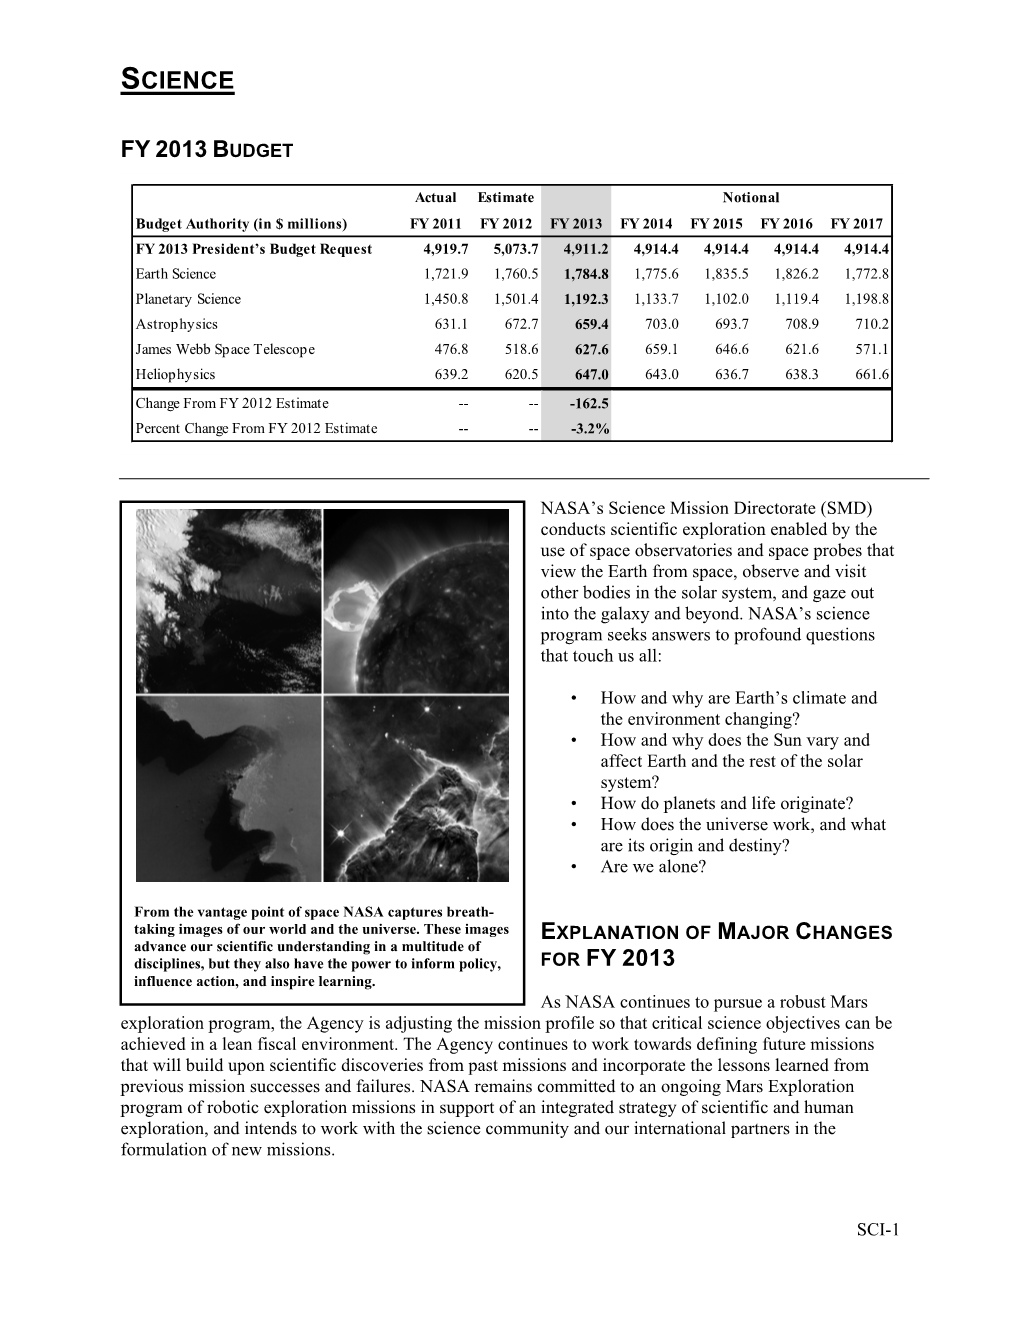 NASA FY13 Budget Estimates--Science Overview